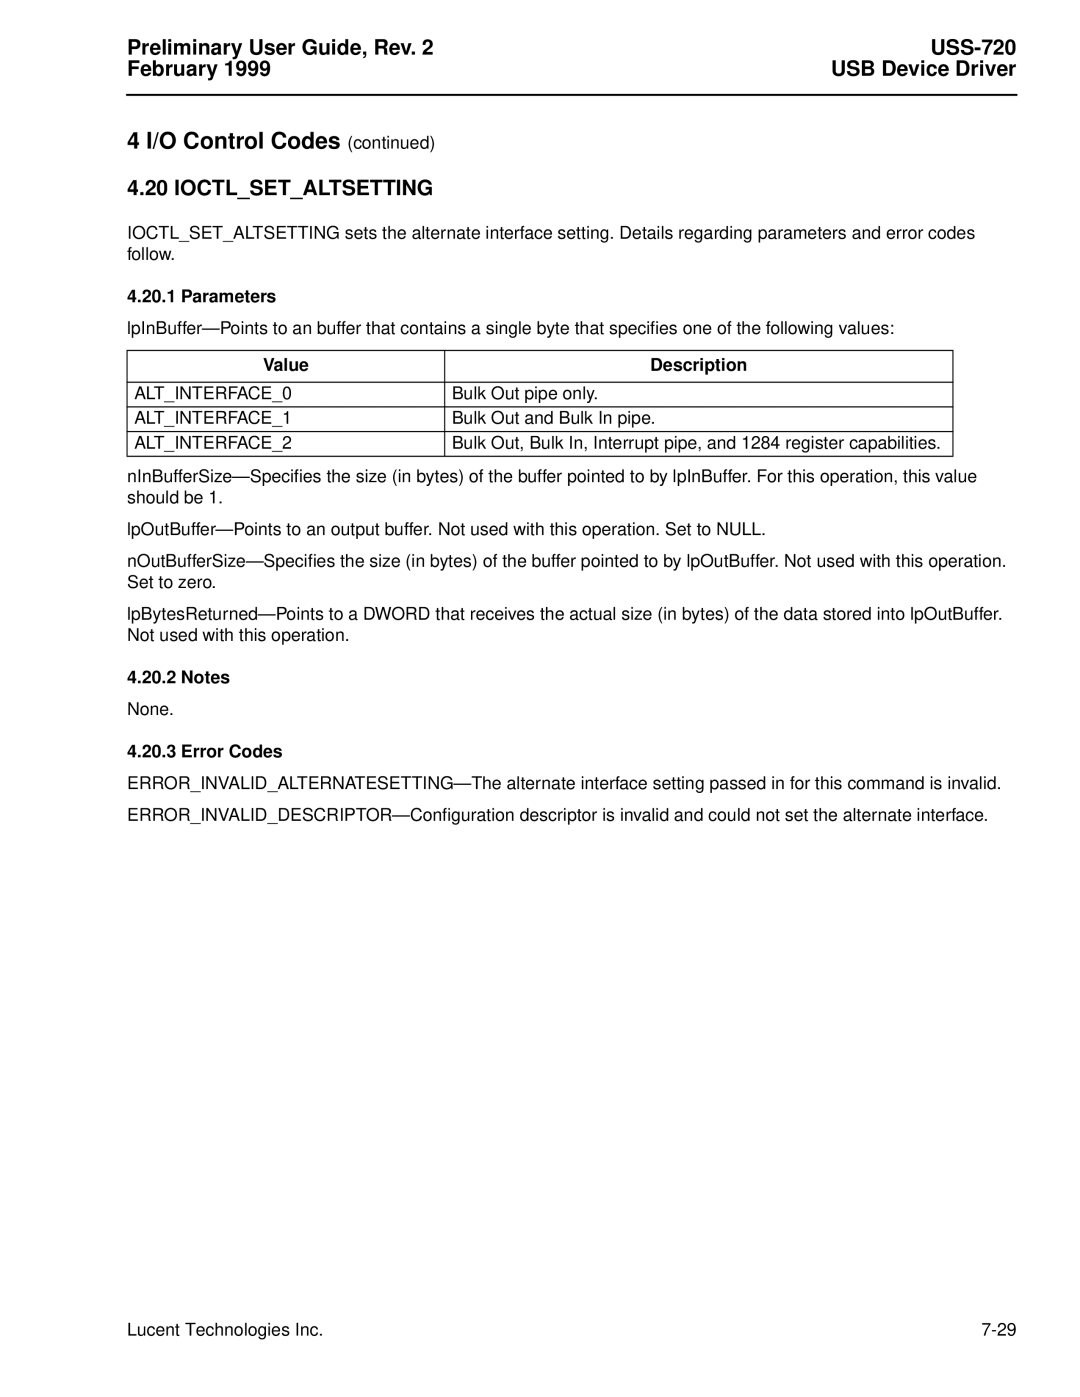 Lucent Technologies USS-720 manual Ioctlsetaltsetting, 4 I/O Control Codes continued, Preliminary User Guide, Rev, February 